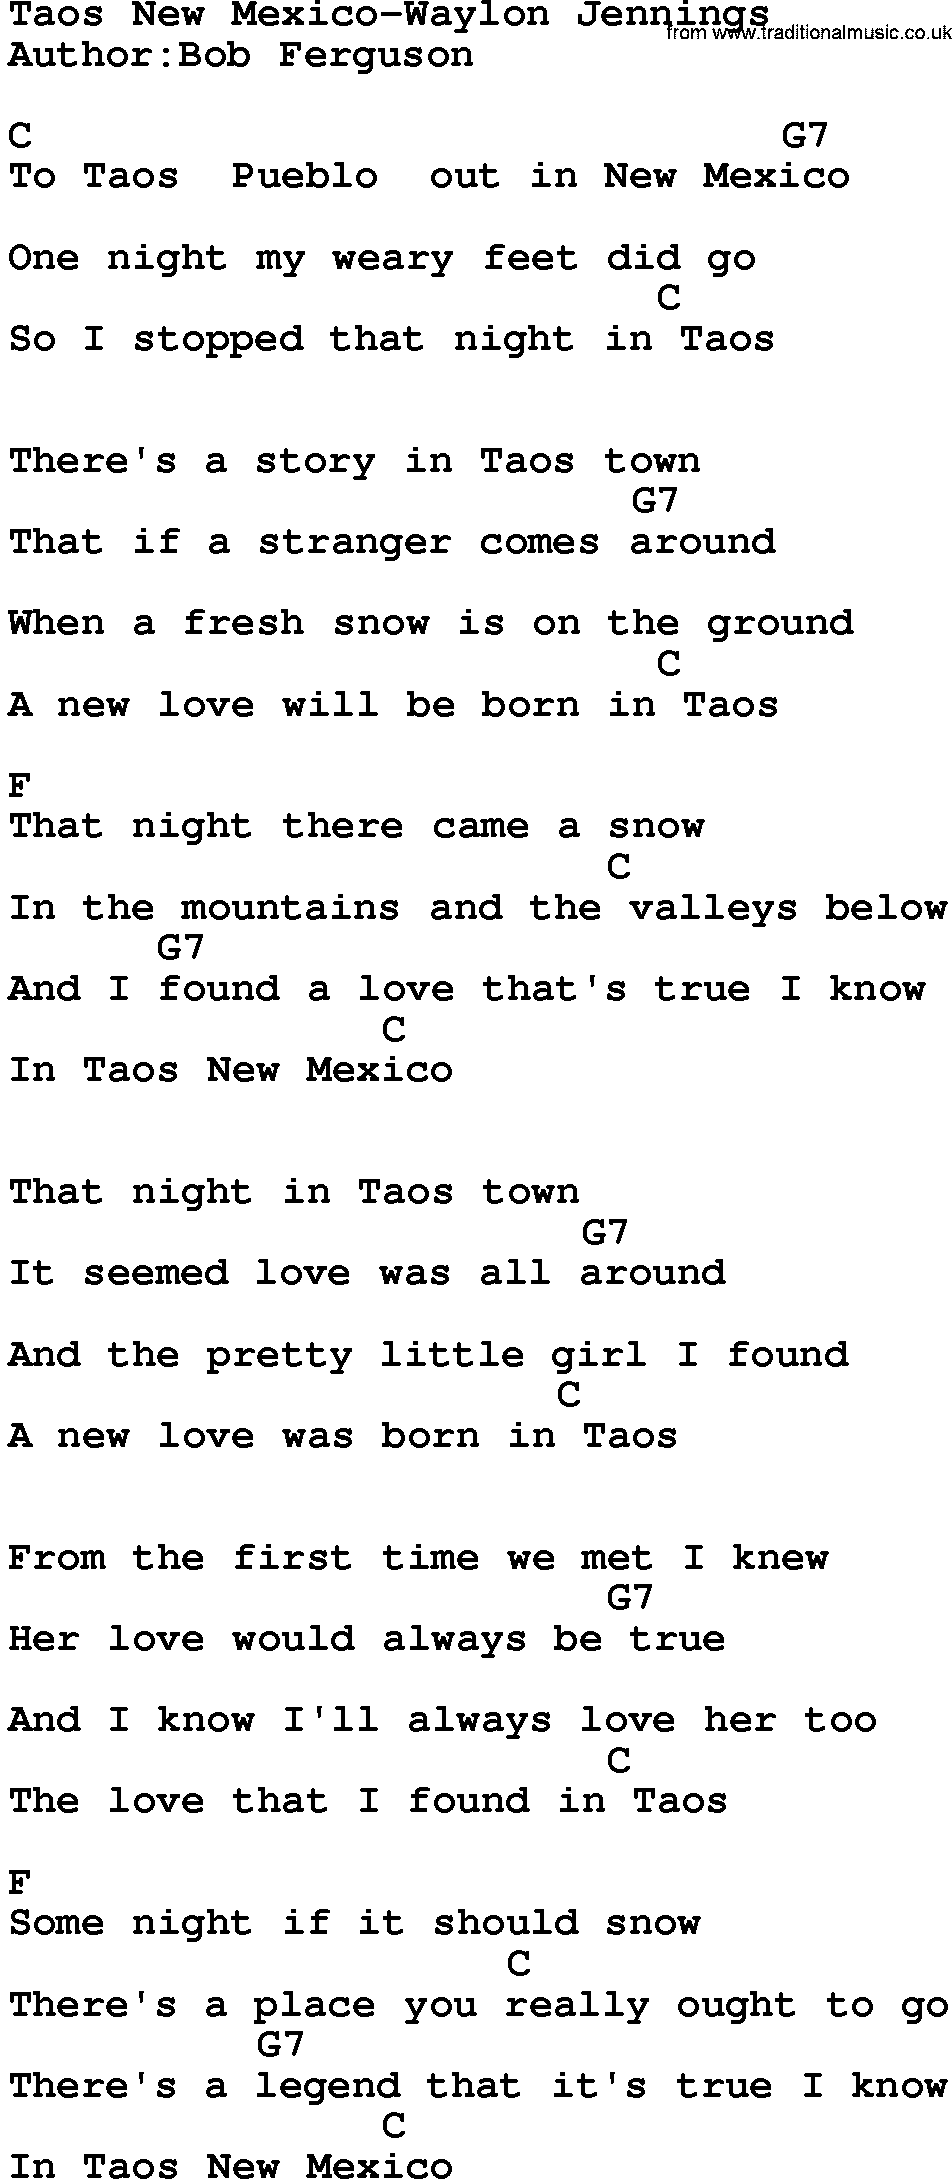 Country music song: Taos New Mexico-Waylon Jennings lyrics and chords